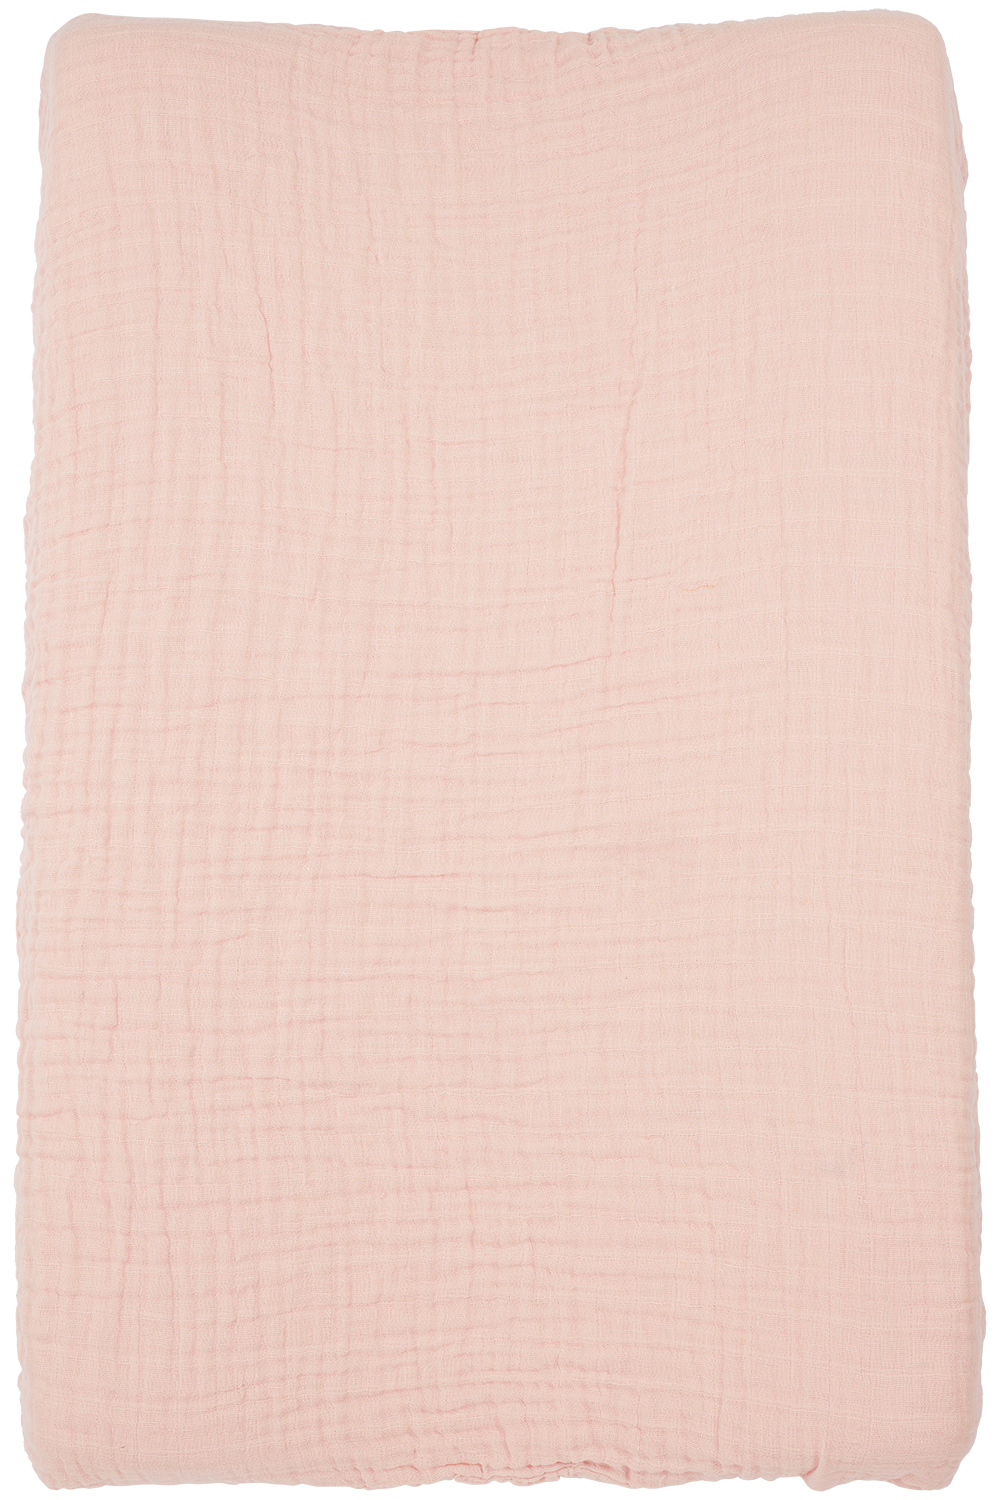 Aankleedkussenhoes pre-washed hydrofiel Uni - soft pink - 50x70cm